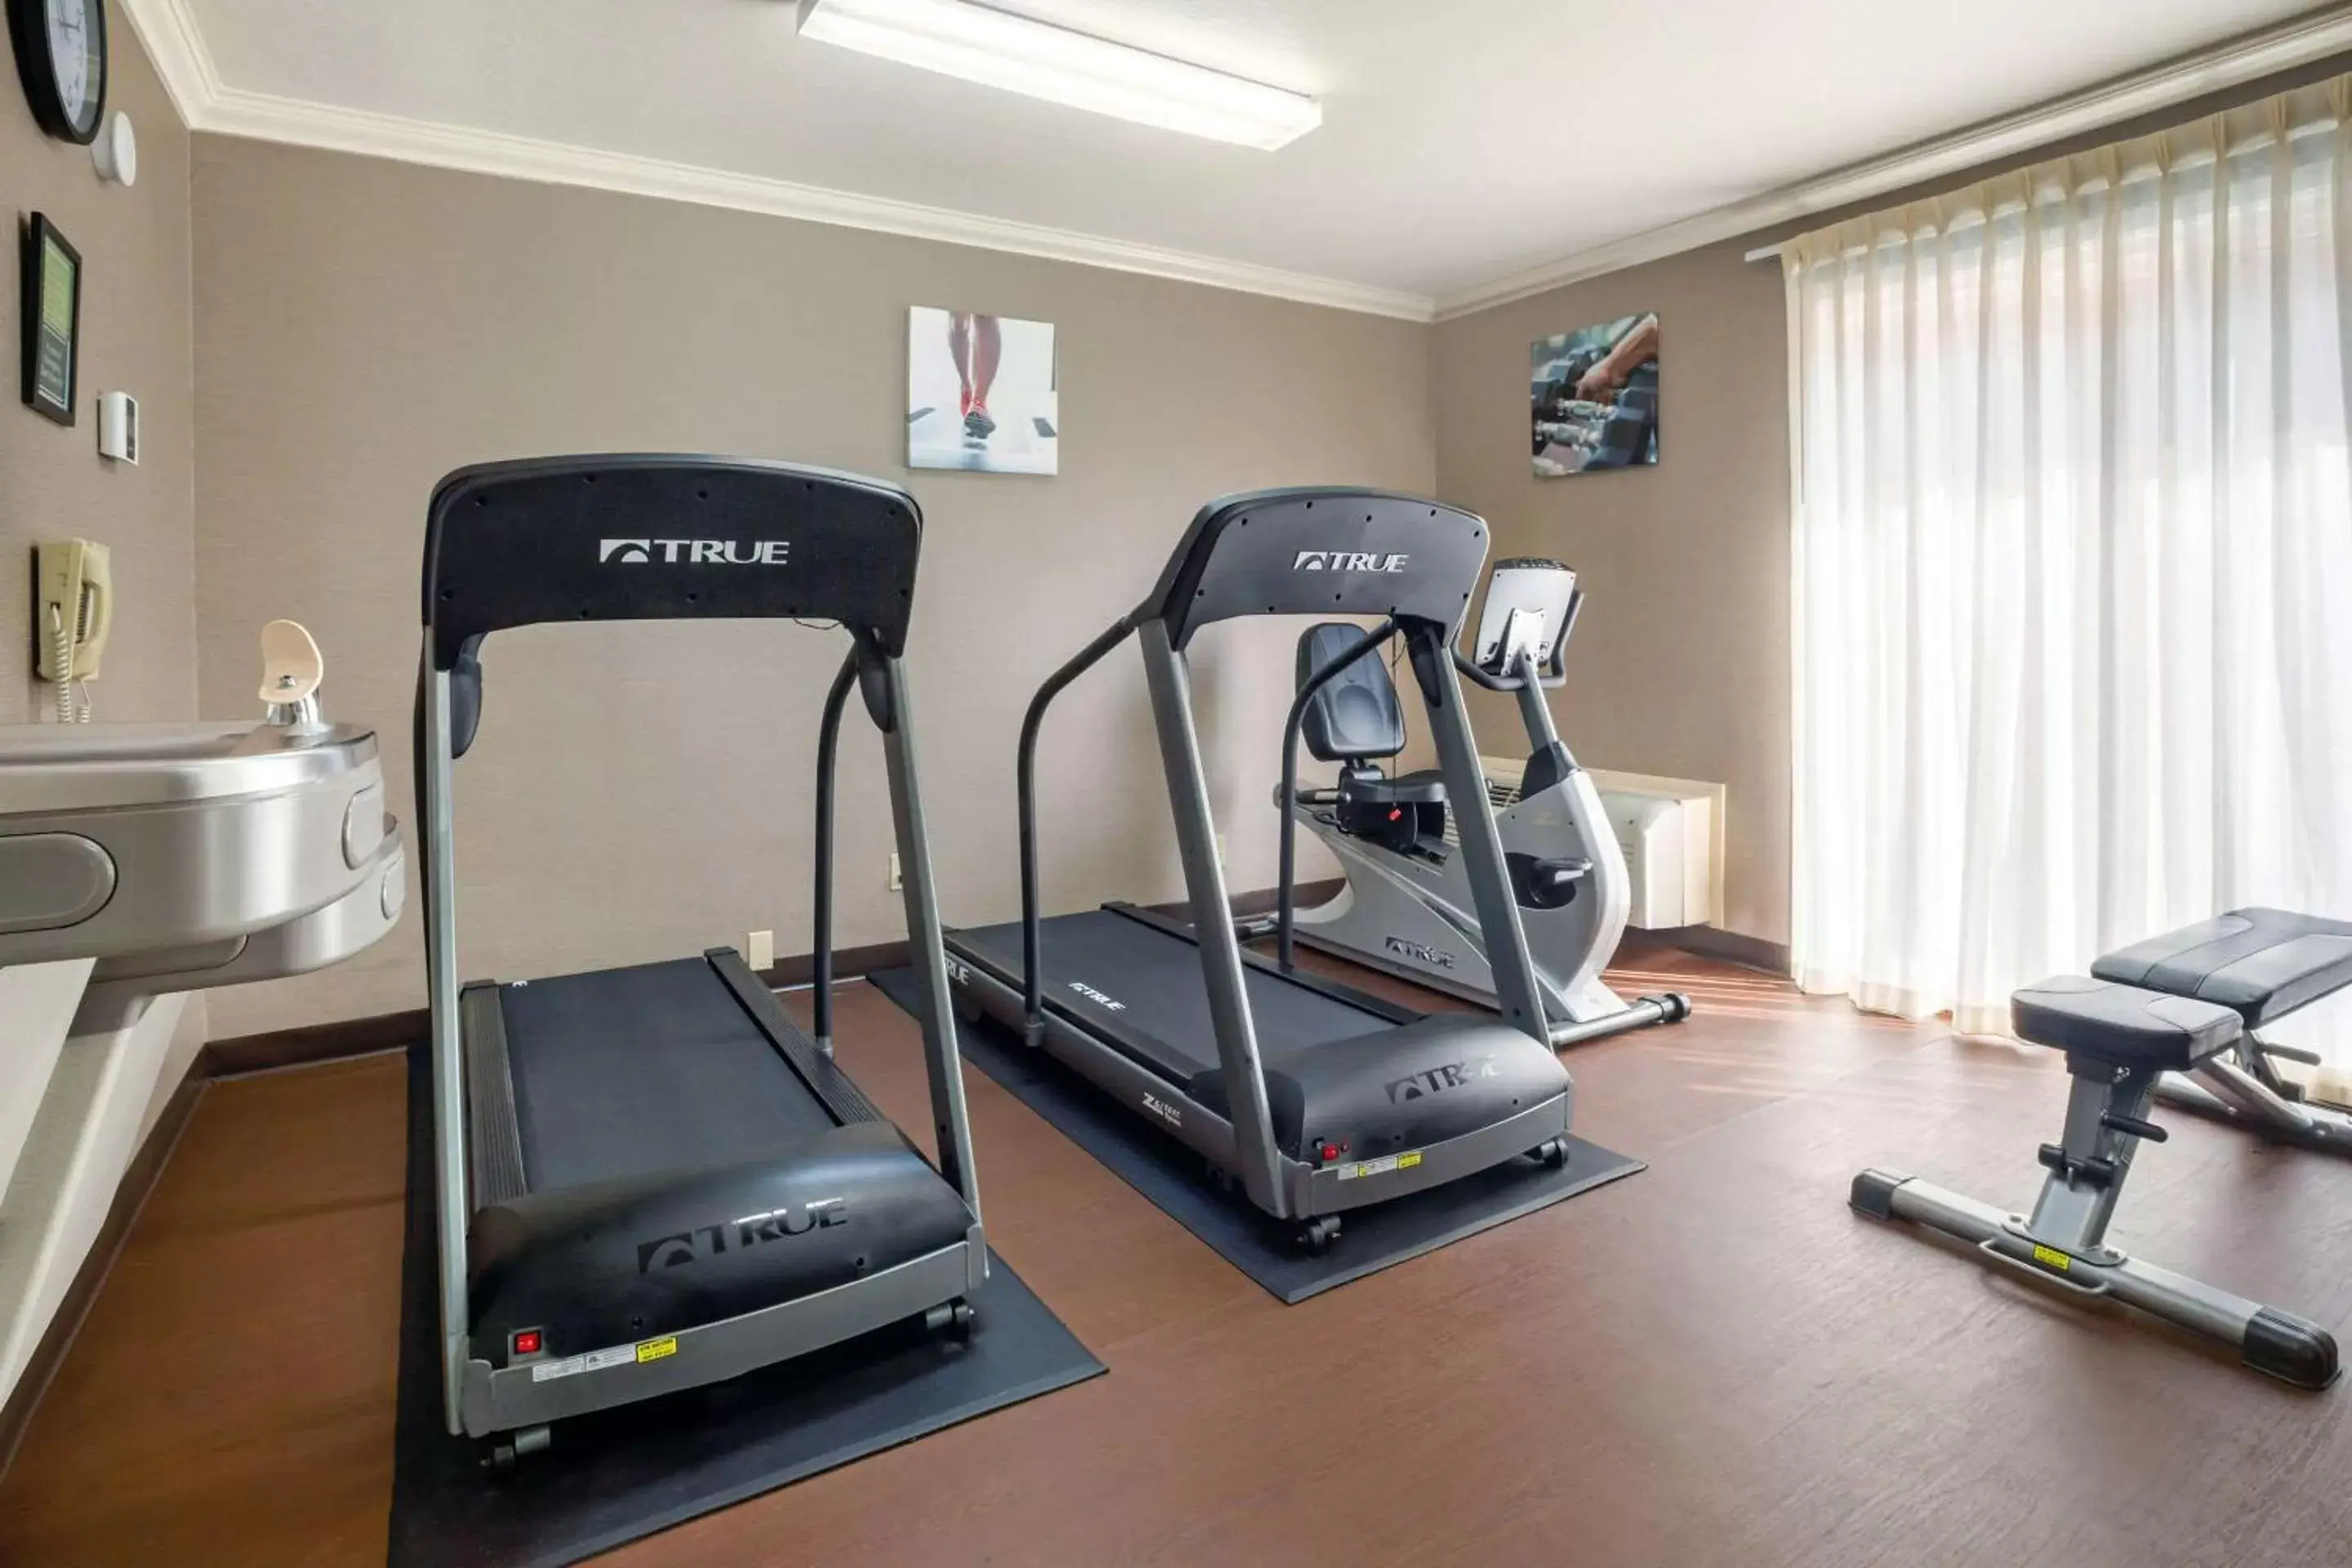 Fitness centre/facilities, Fitness Center/Facilities in Comfort Inn Castro Valley